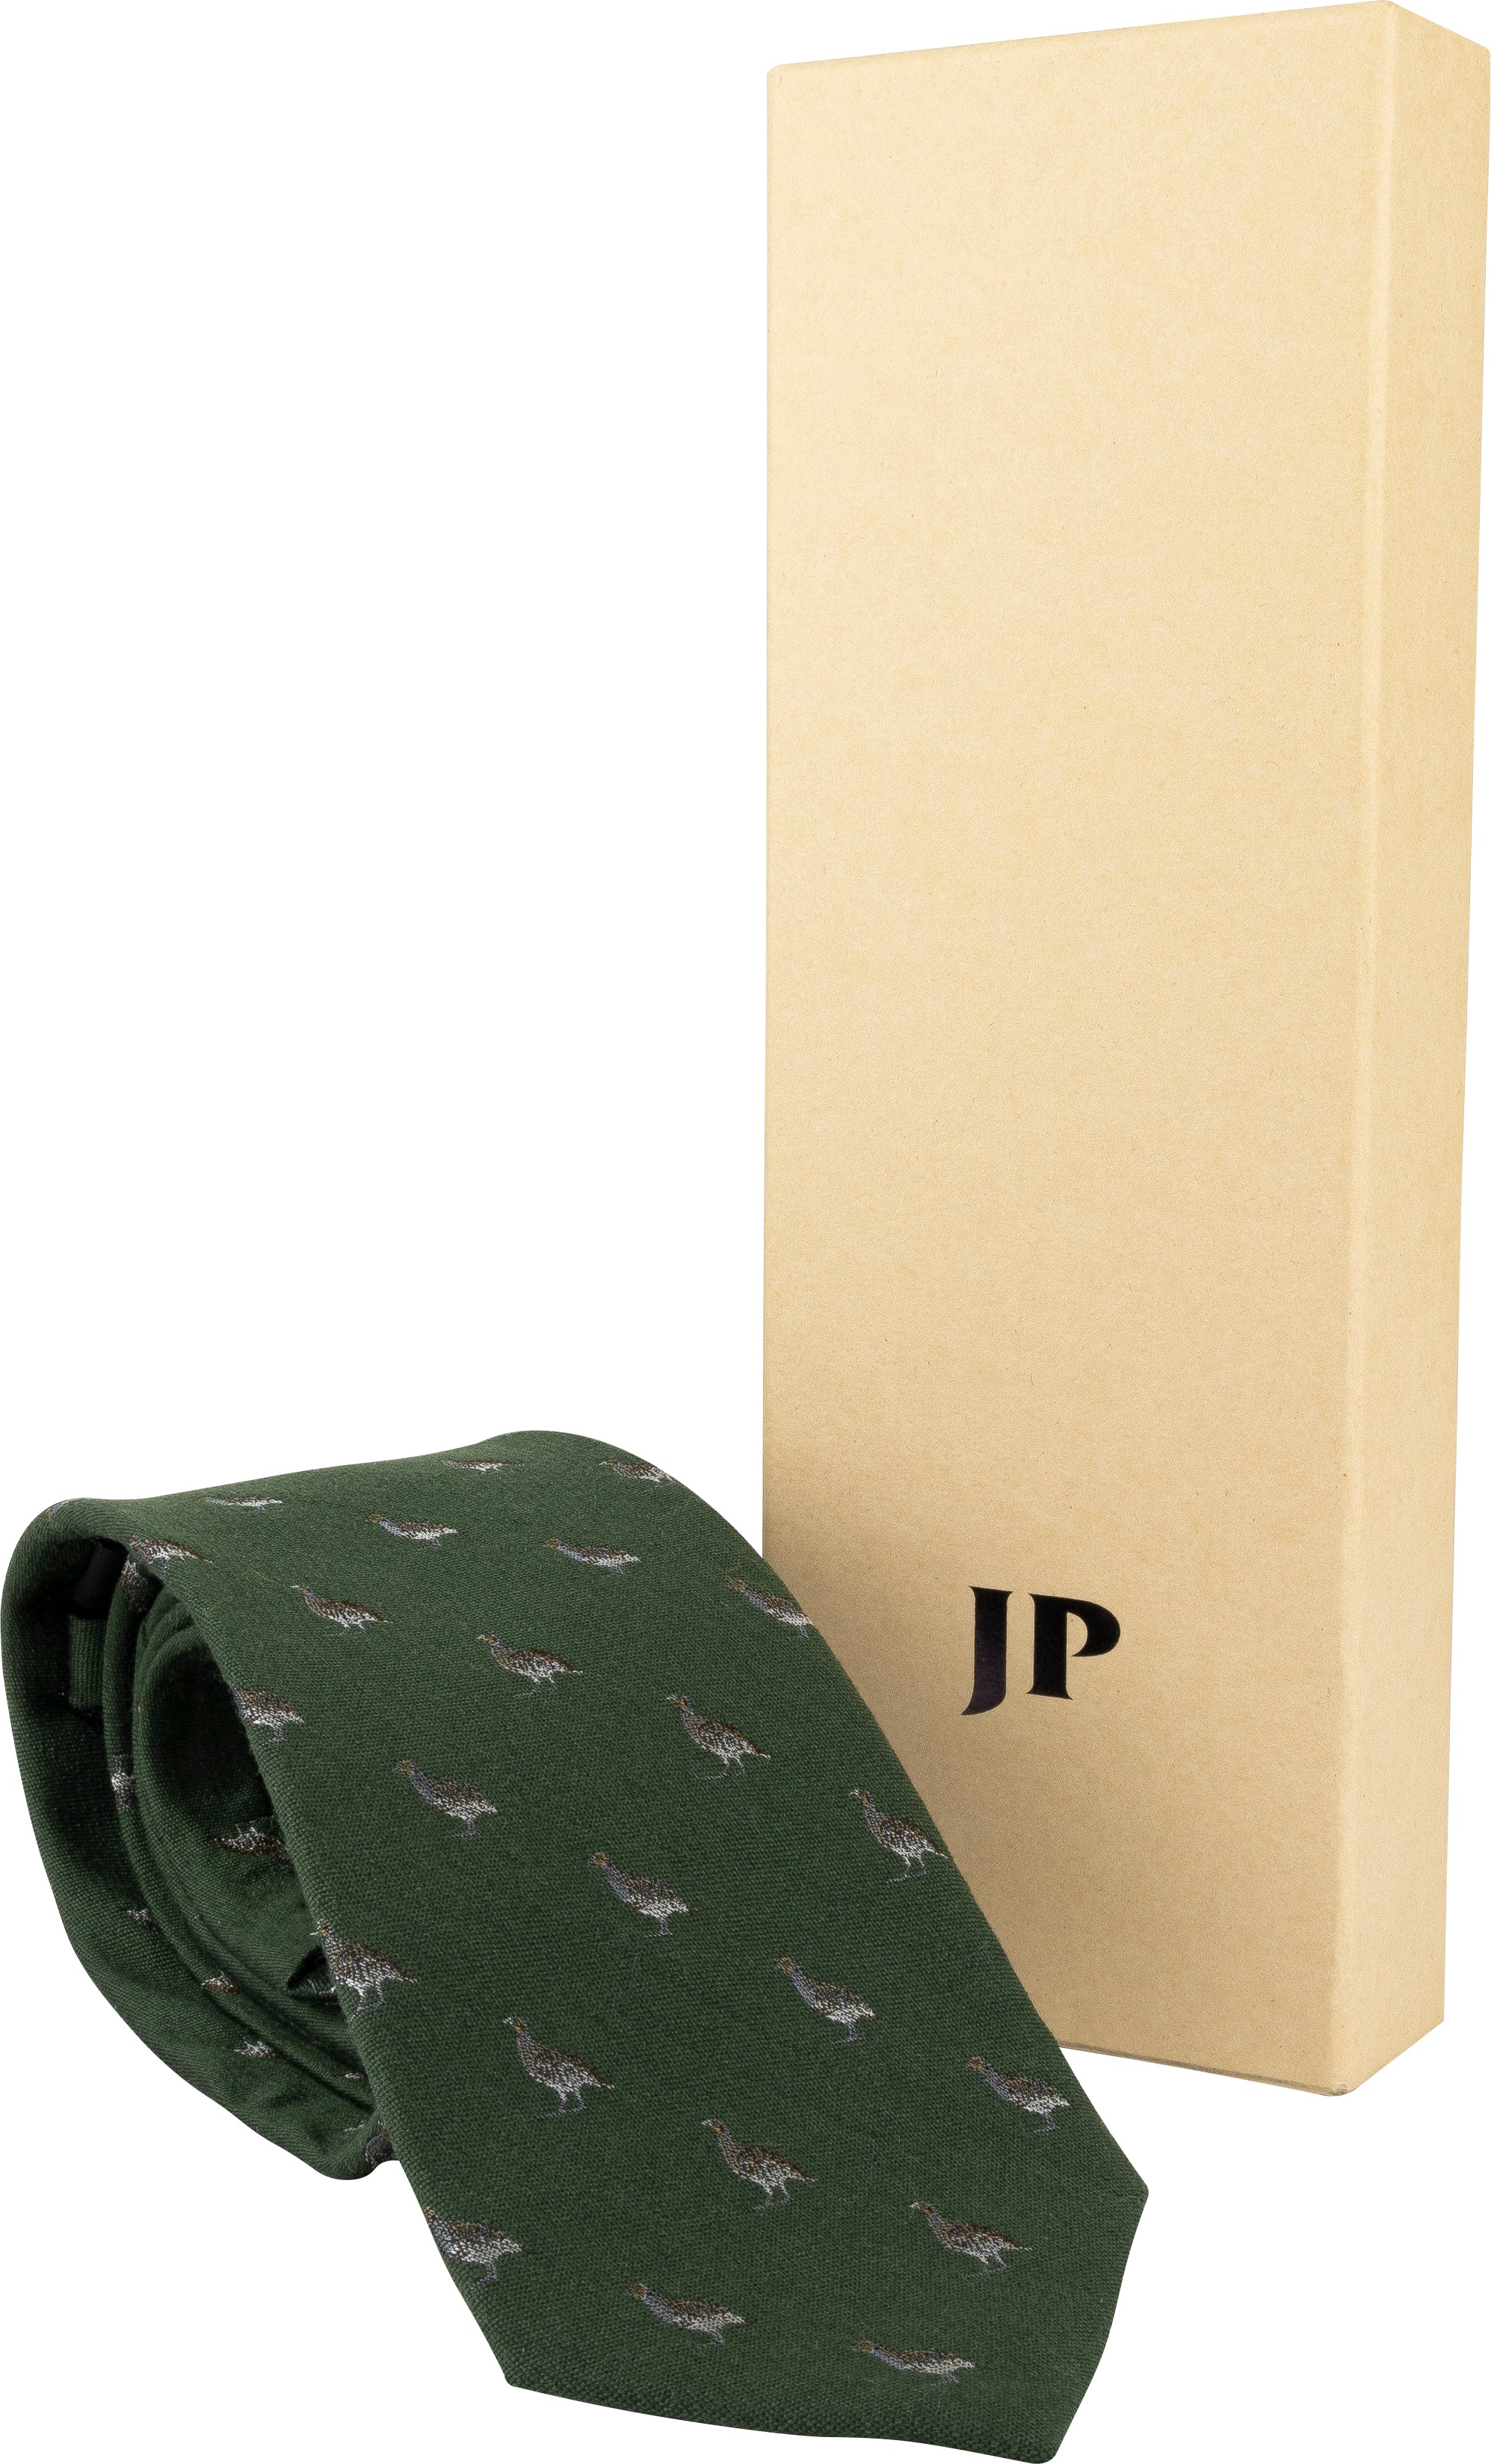 Jack Pyke Silk Tie Partridge in Green 